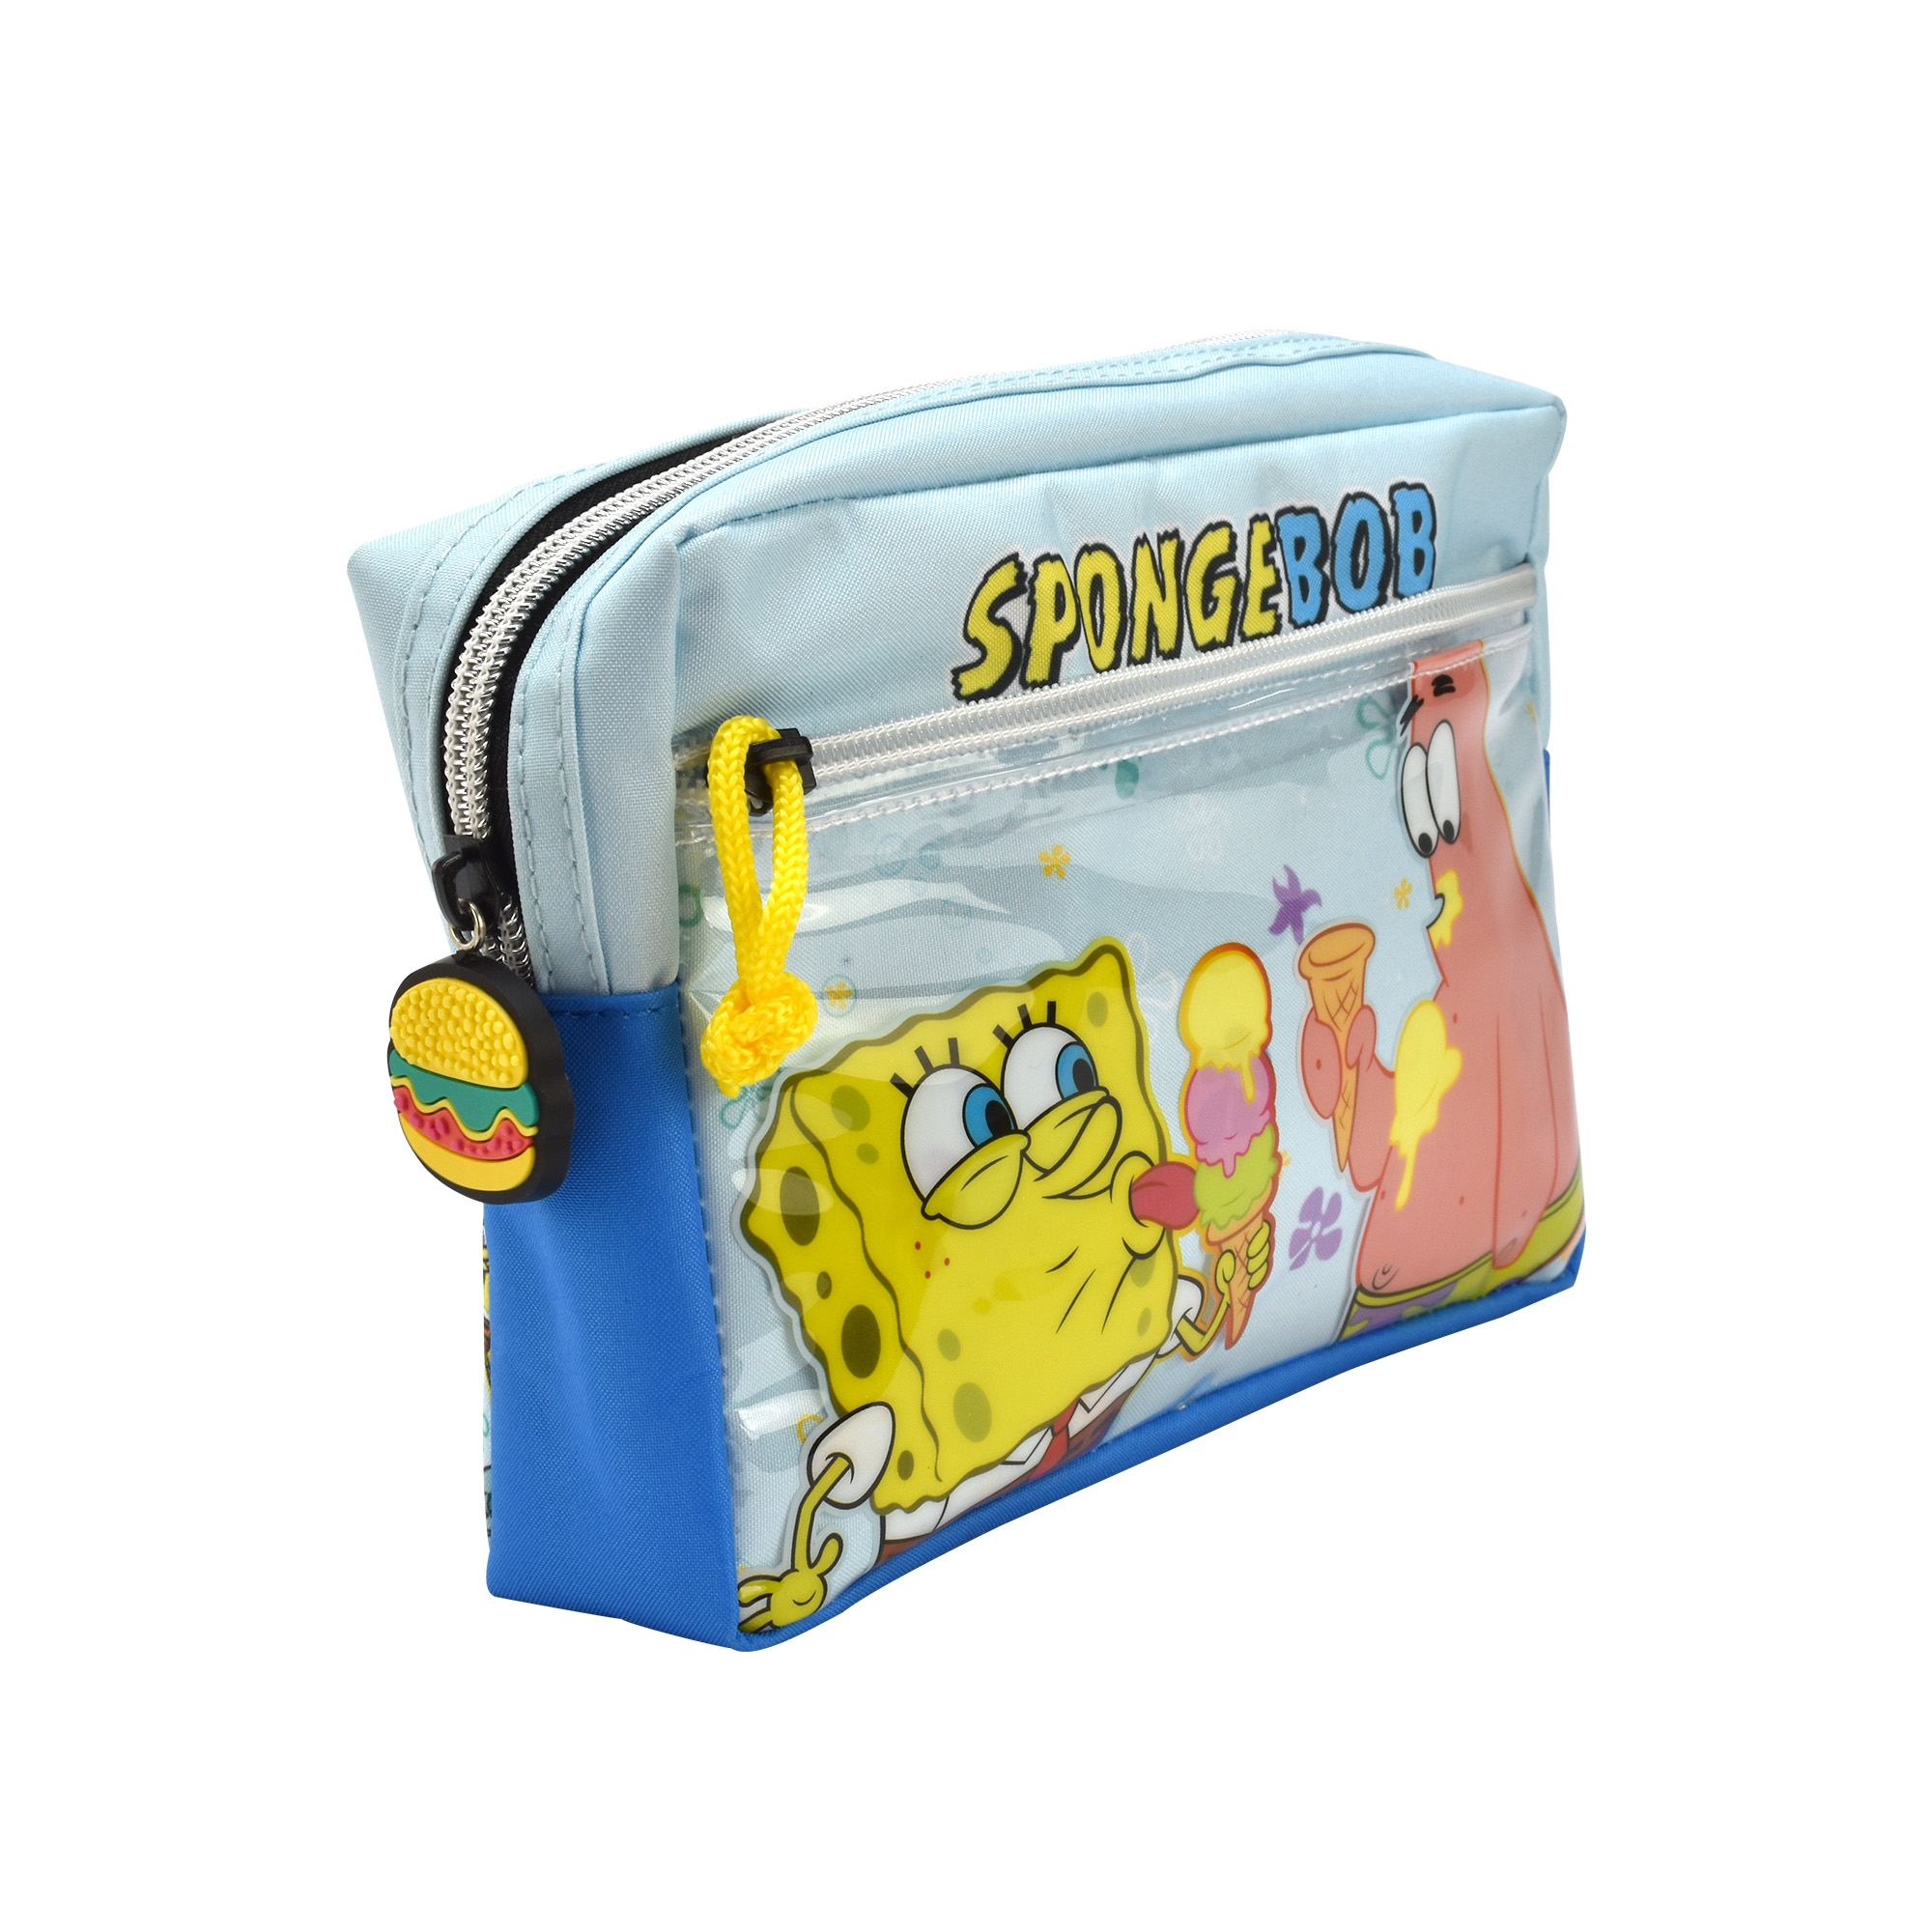 SpongeBob - Mäppchen